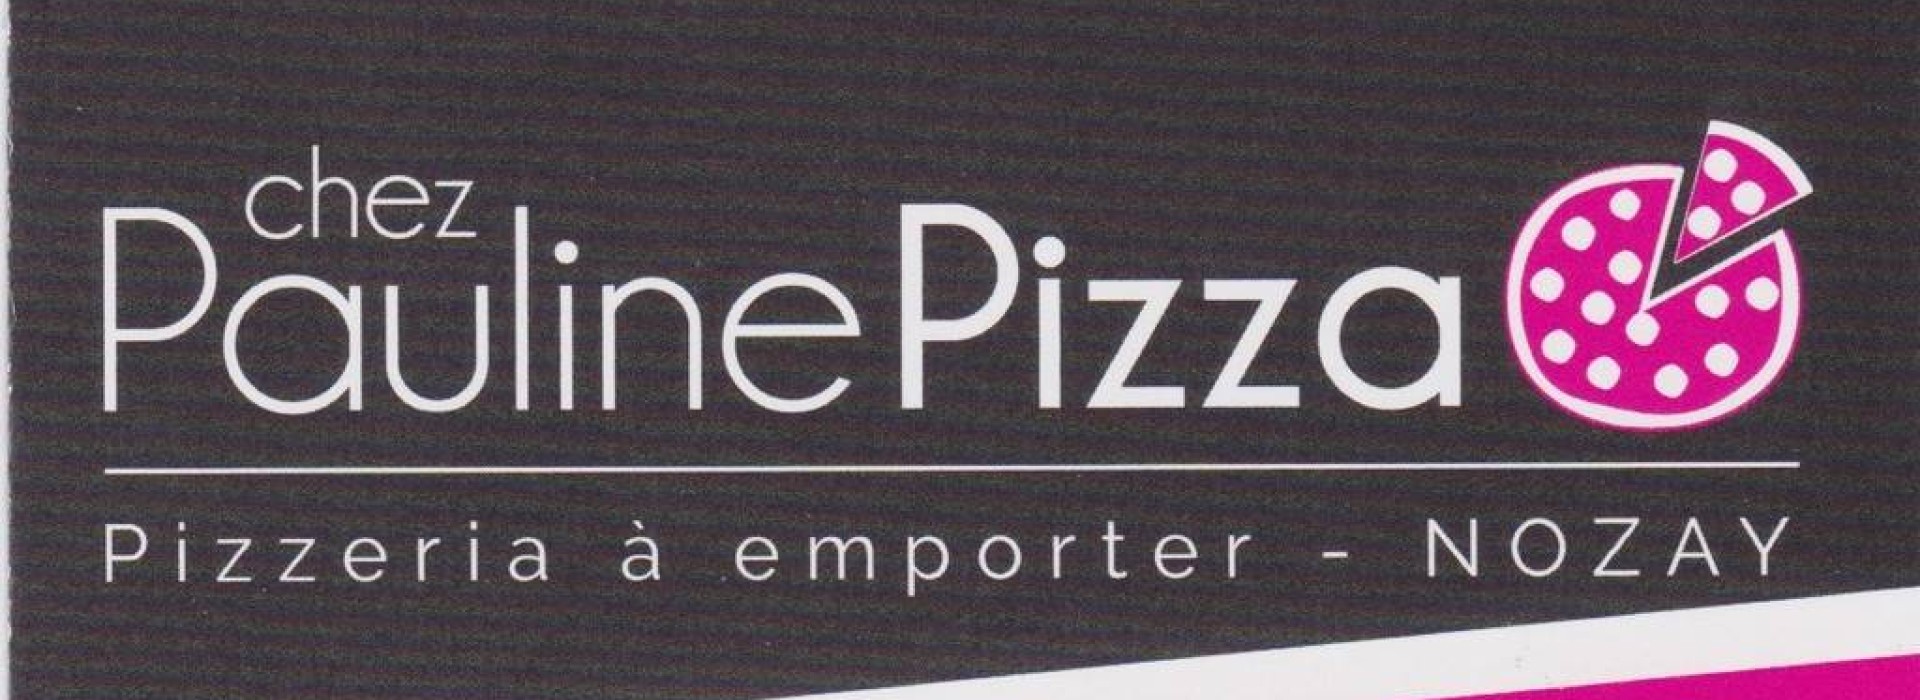 CHEZ PAULINE PIZZA